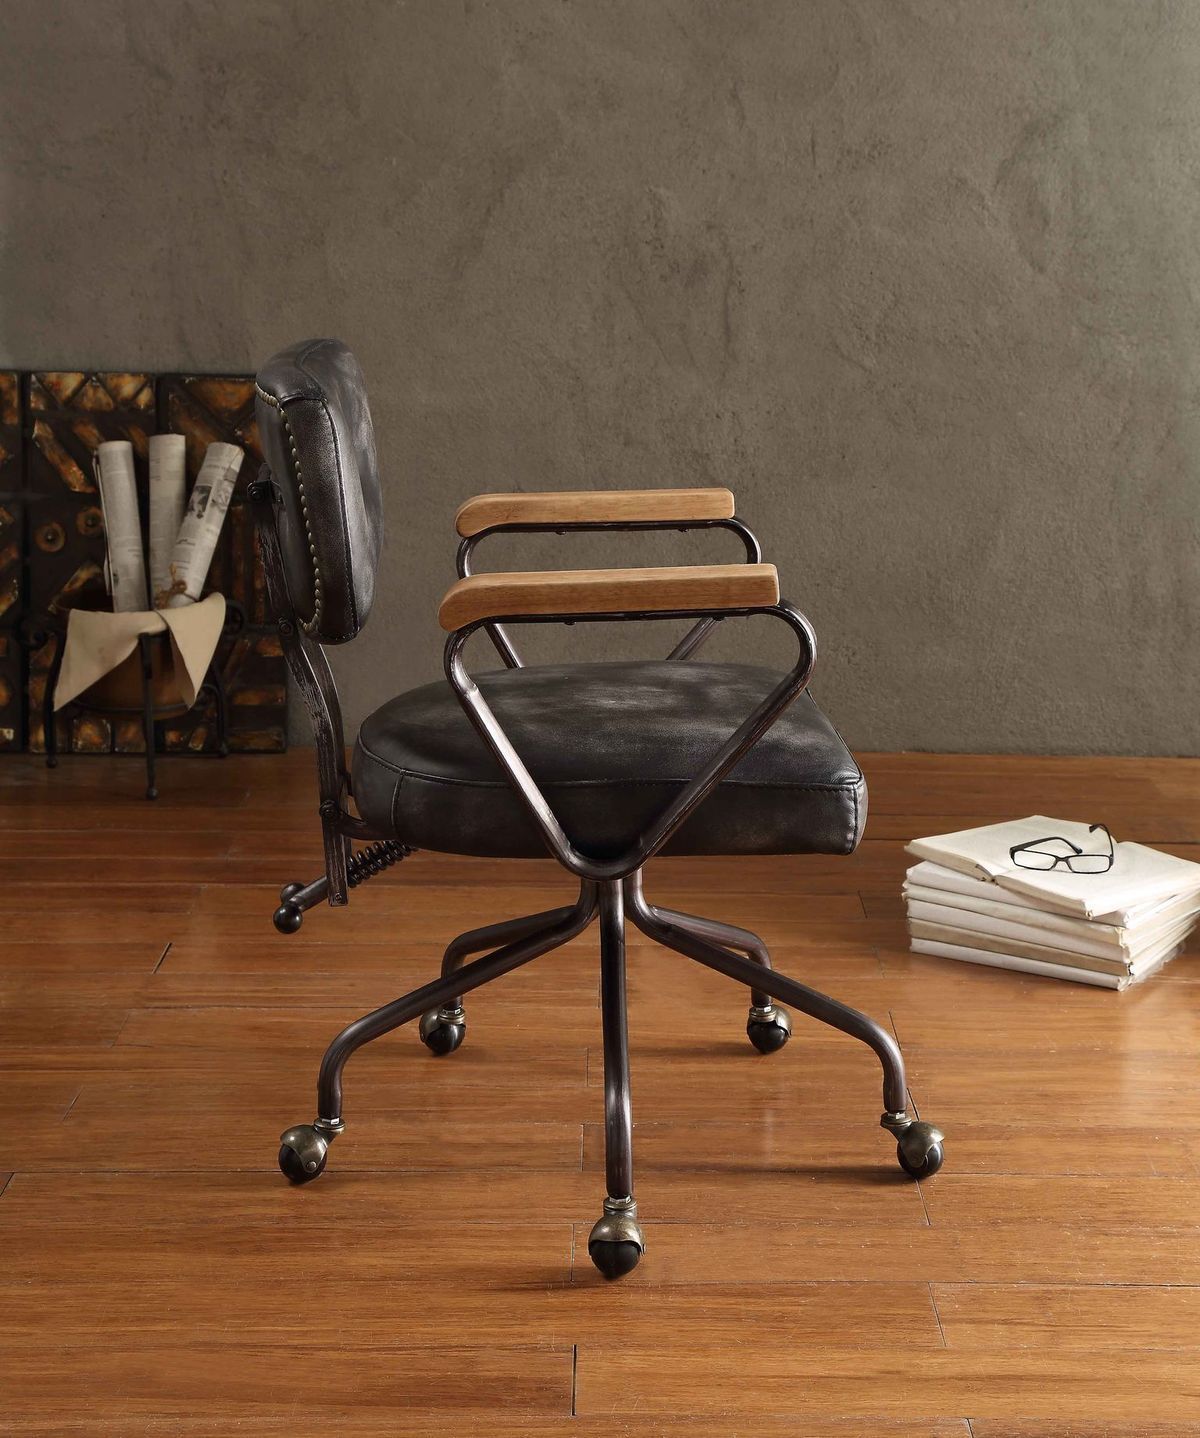 Vintage Office Chair, Top Grain Leather - Black